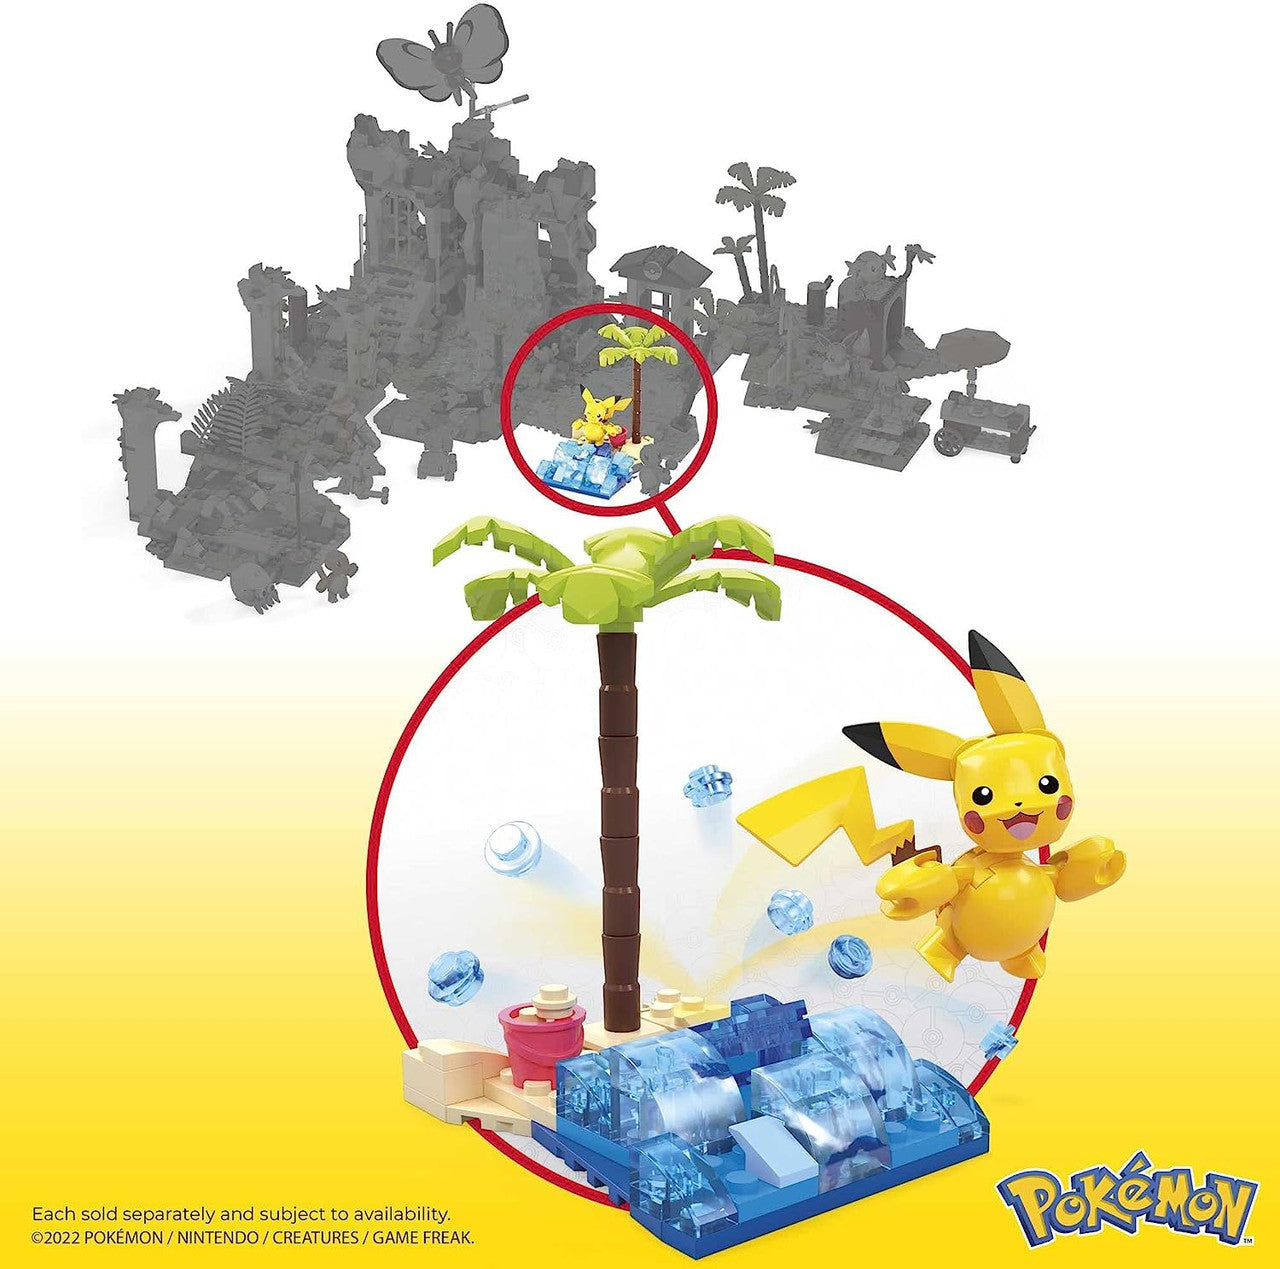 Mattel - Pokemon Mega Construx: Adventure Builder - Pikachu's Beach Splash